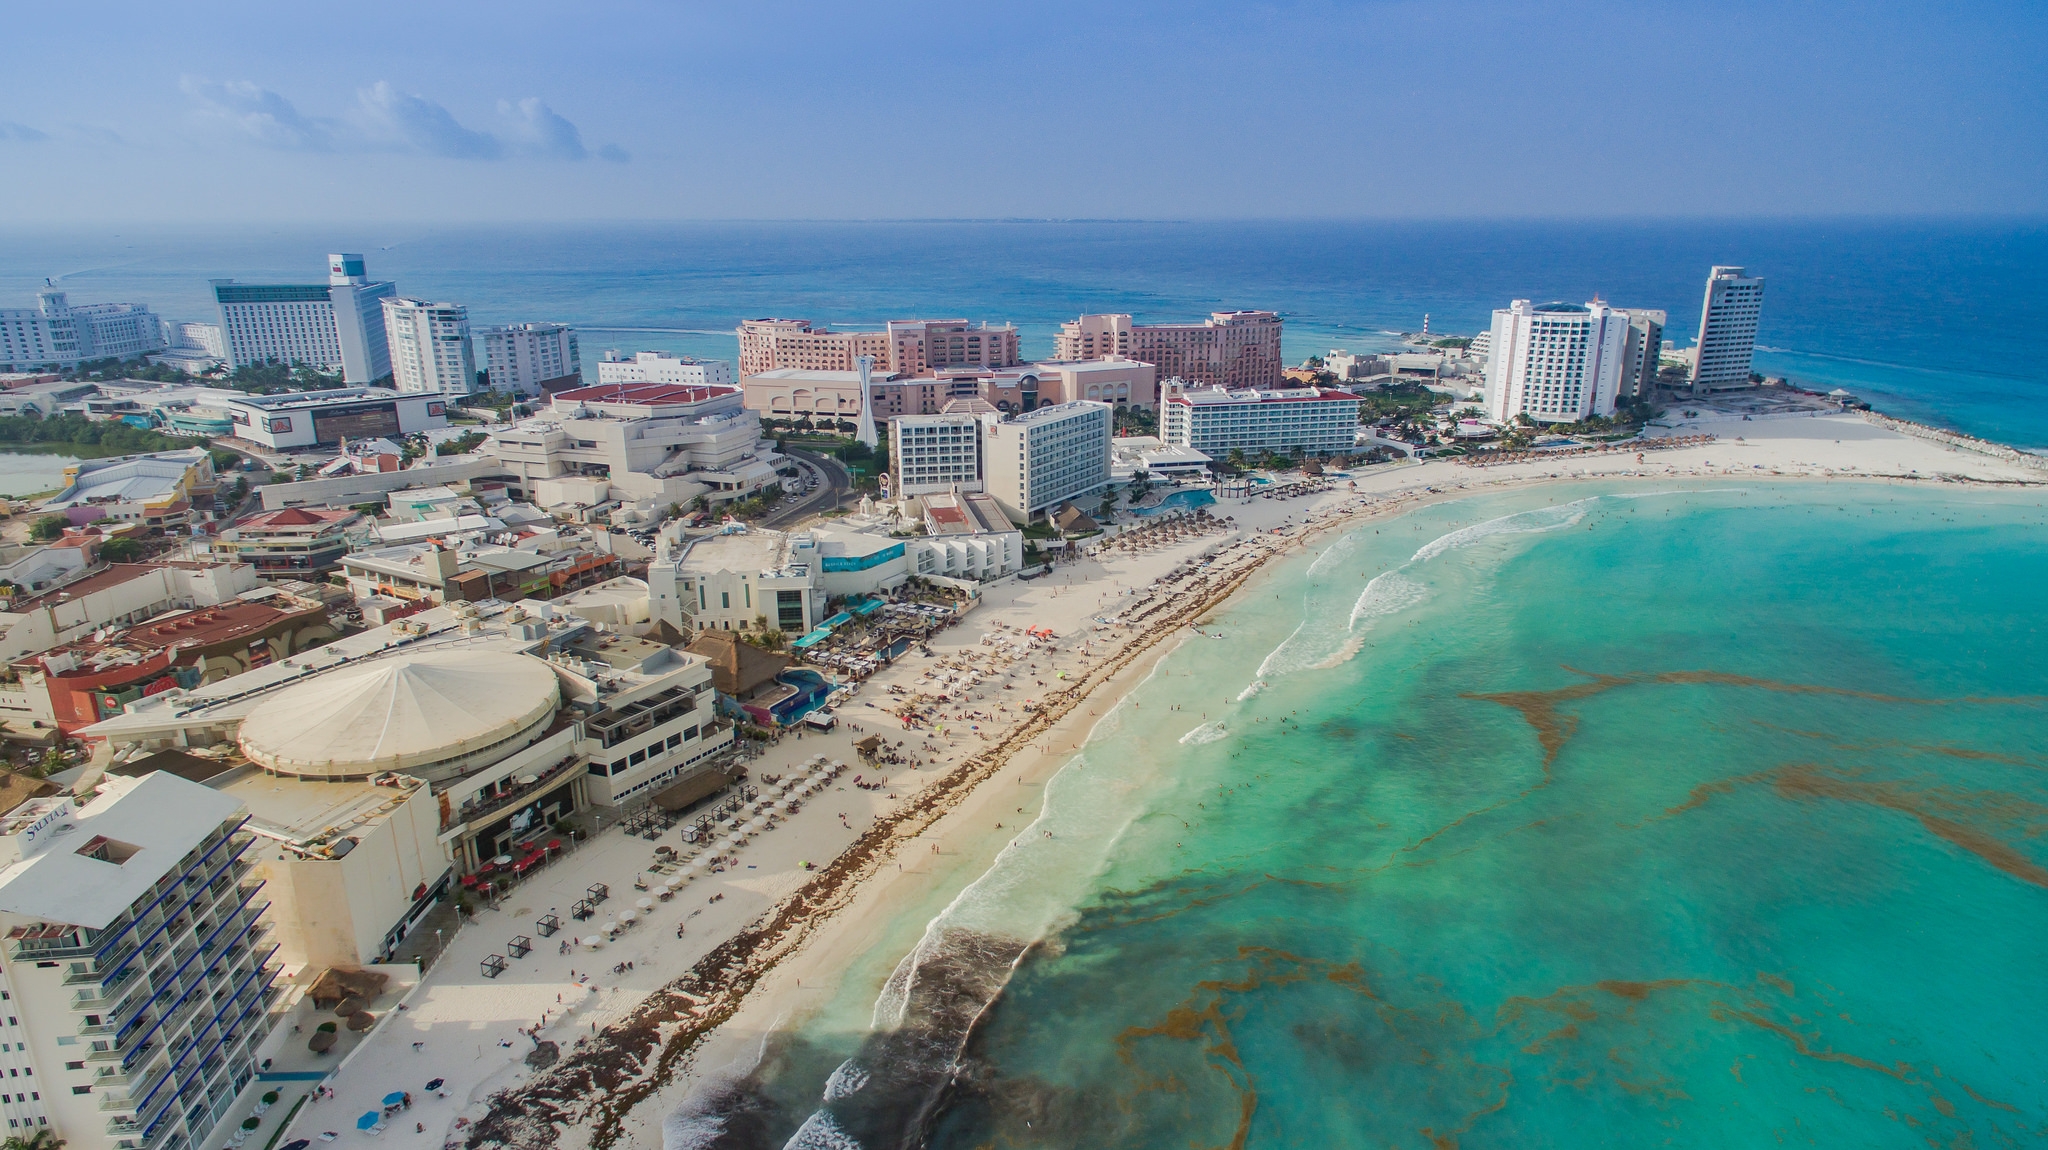 Cancun Hotel Zone Drone Shot Kosher Travel 